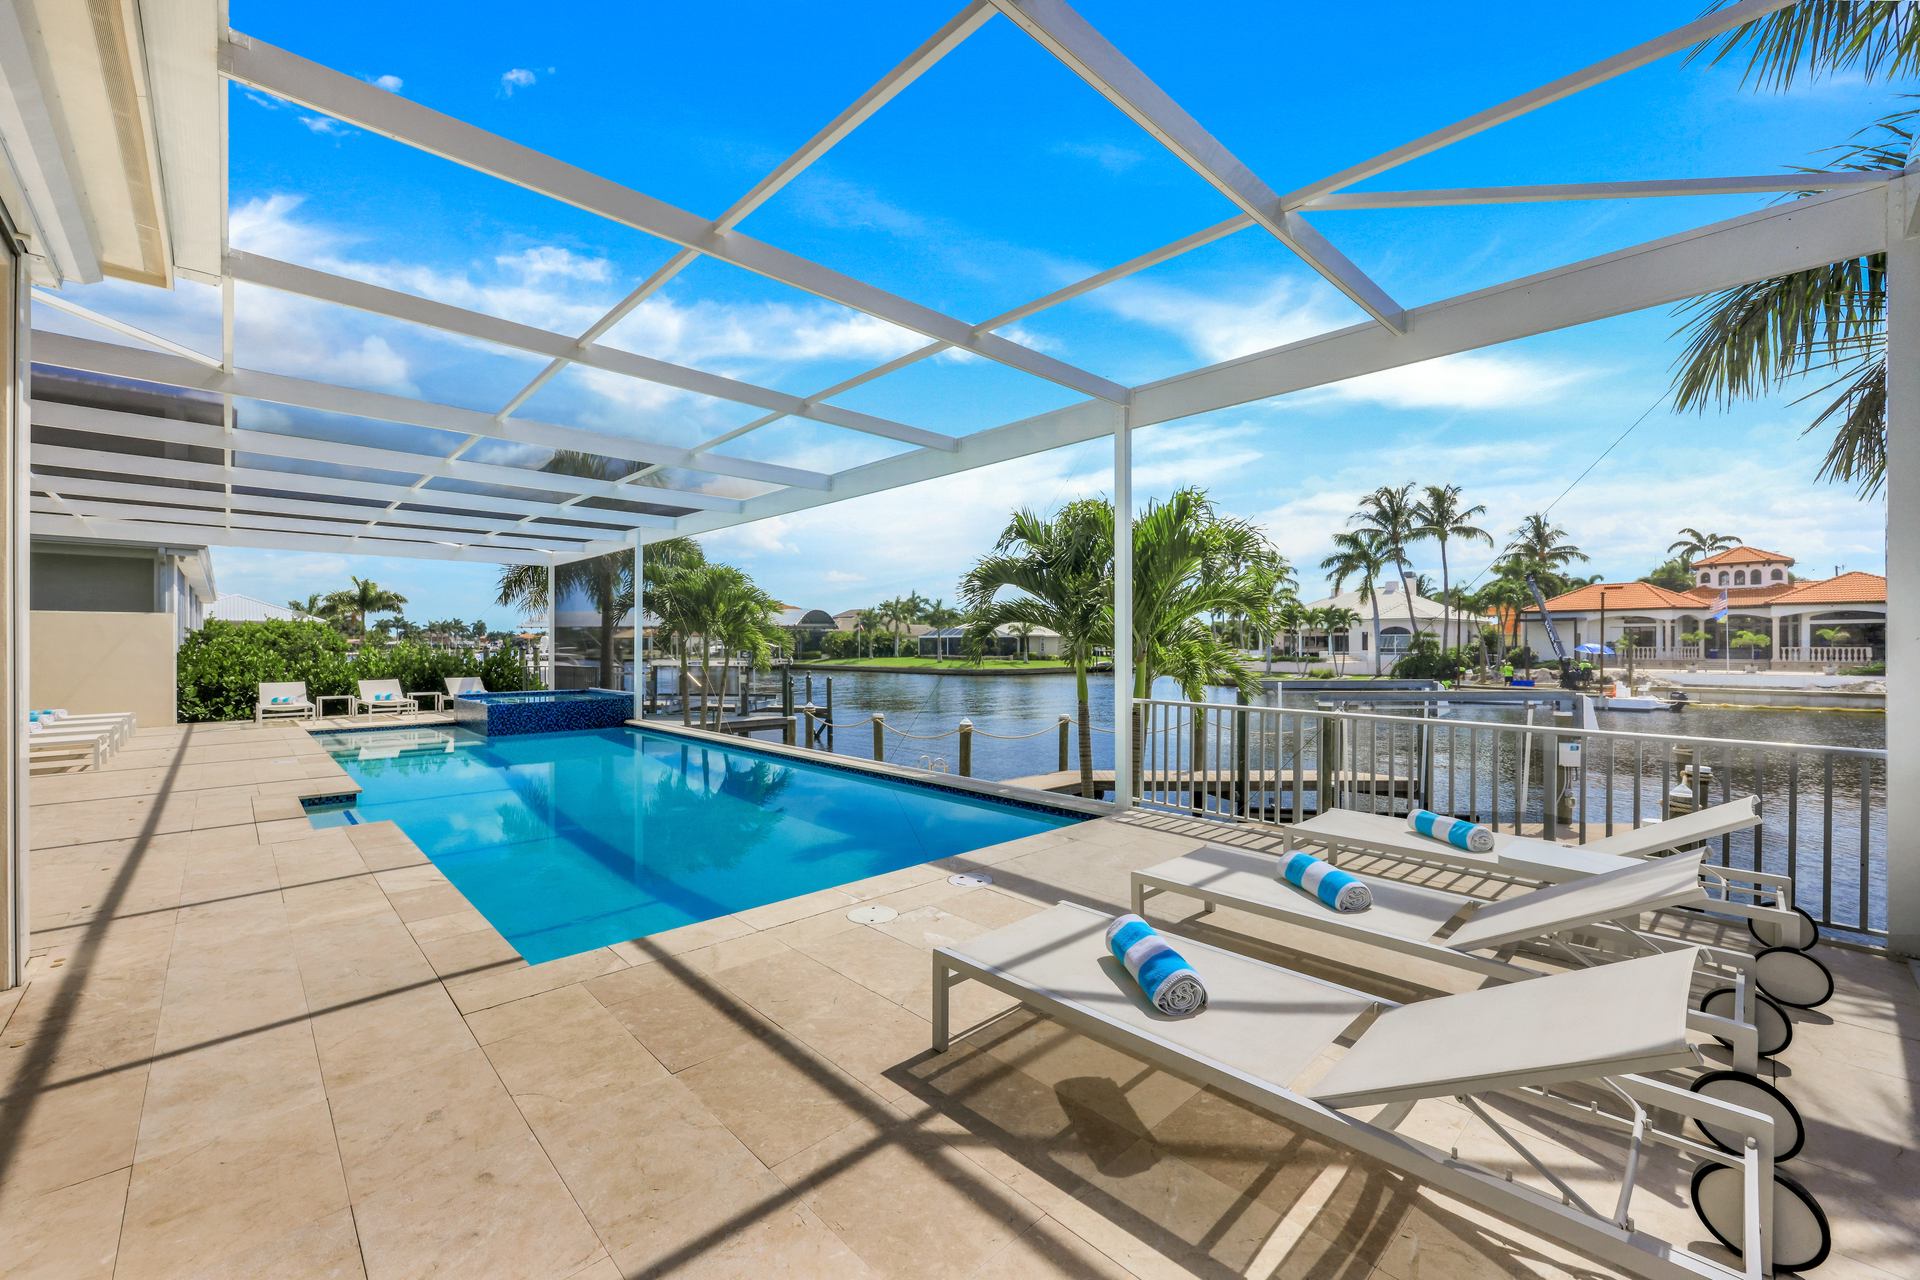 Pool Area in Florida